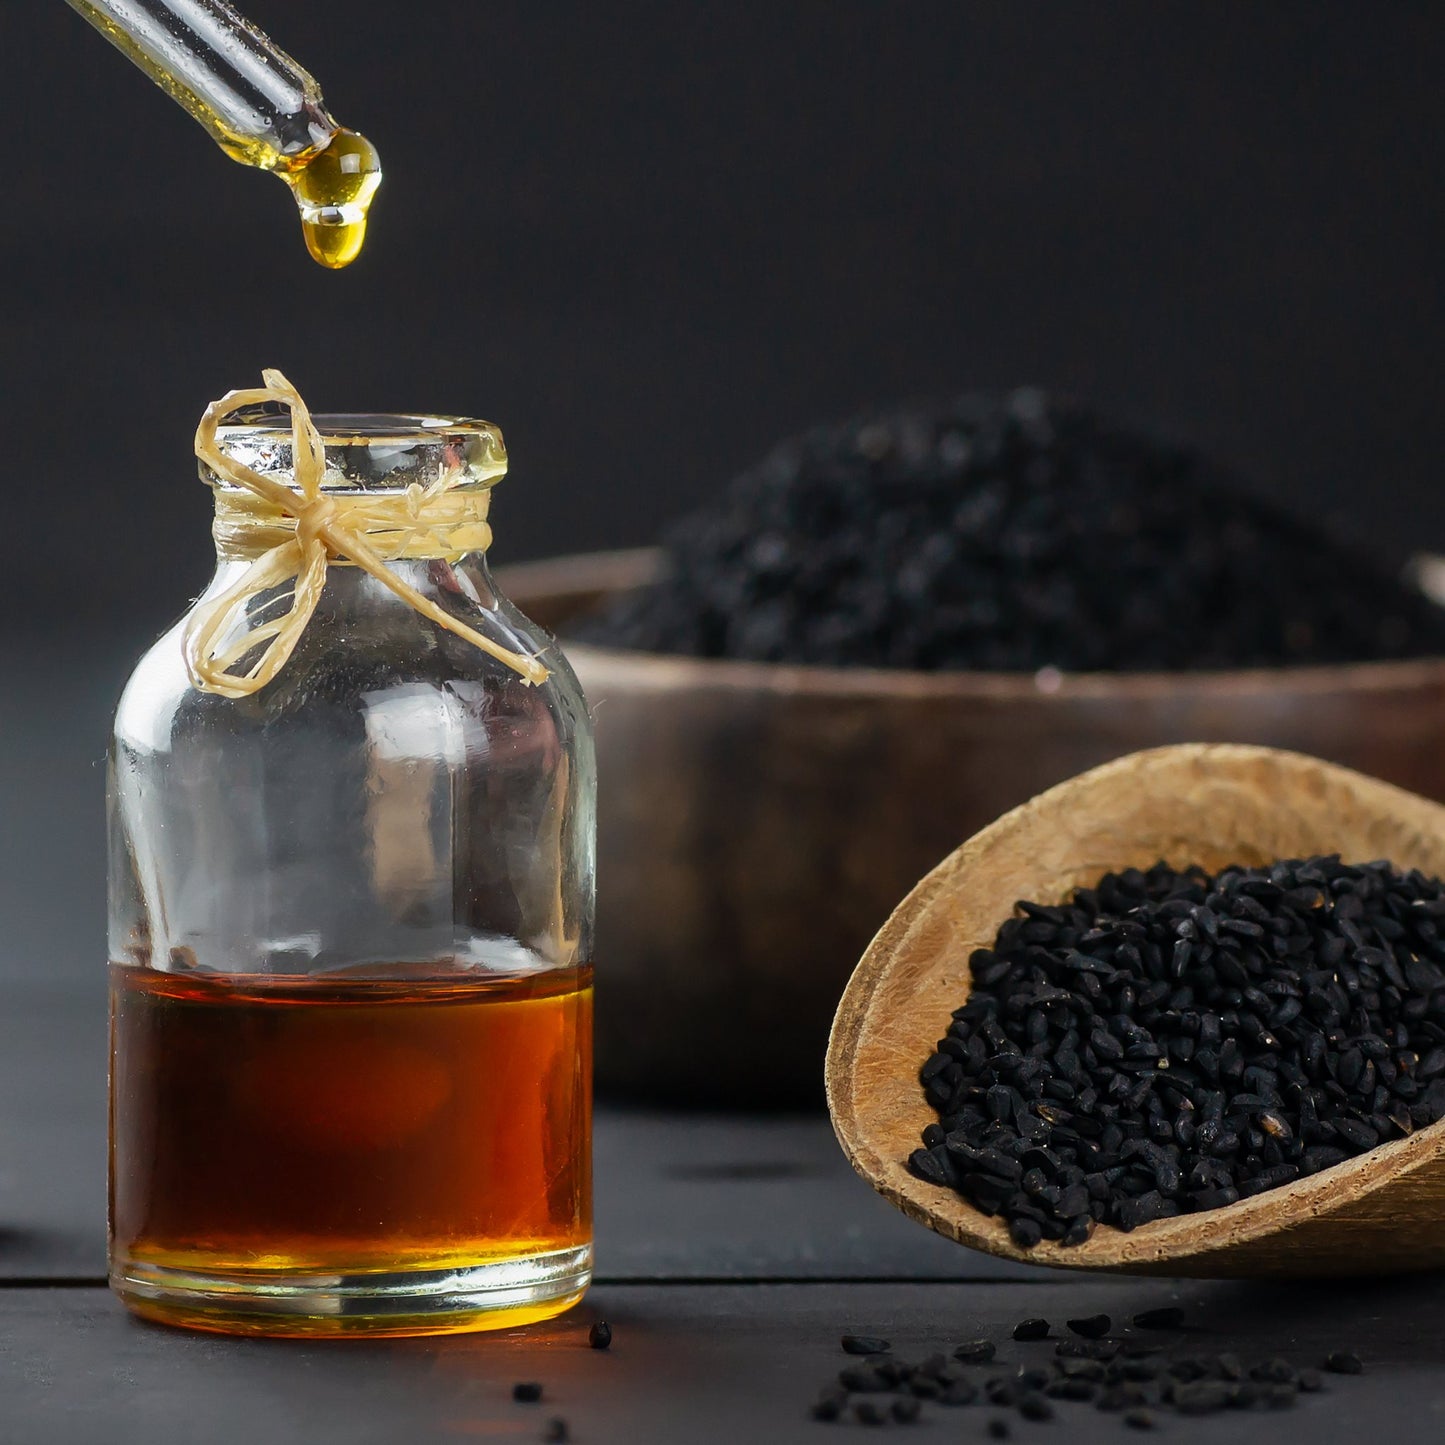 
                  
                    Unrefined Ethiopian Black Seed Oil (Cold-Pressed) 100ml
                  
                